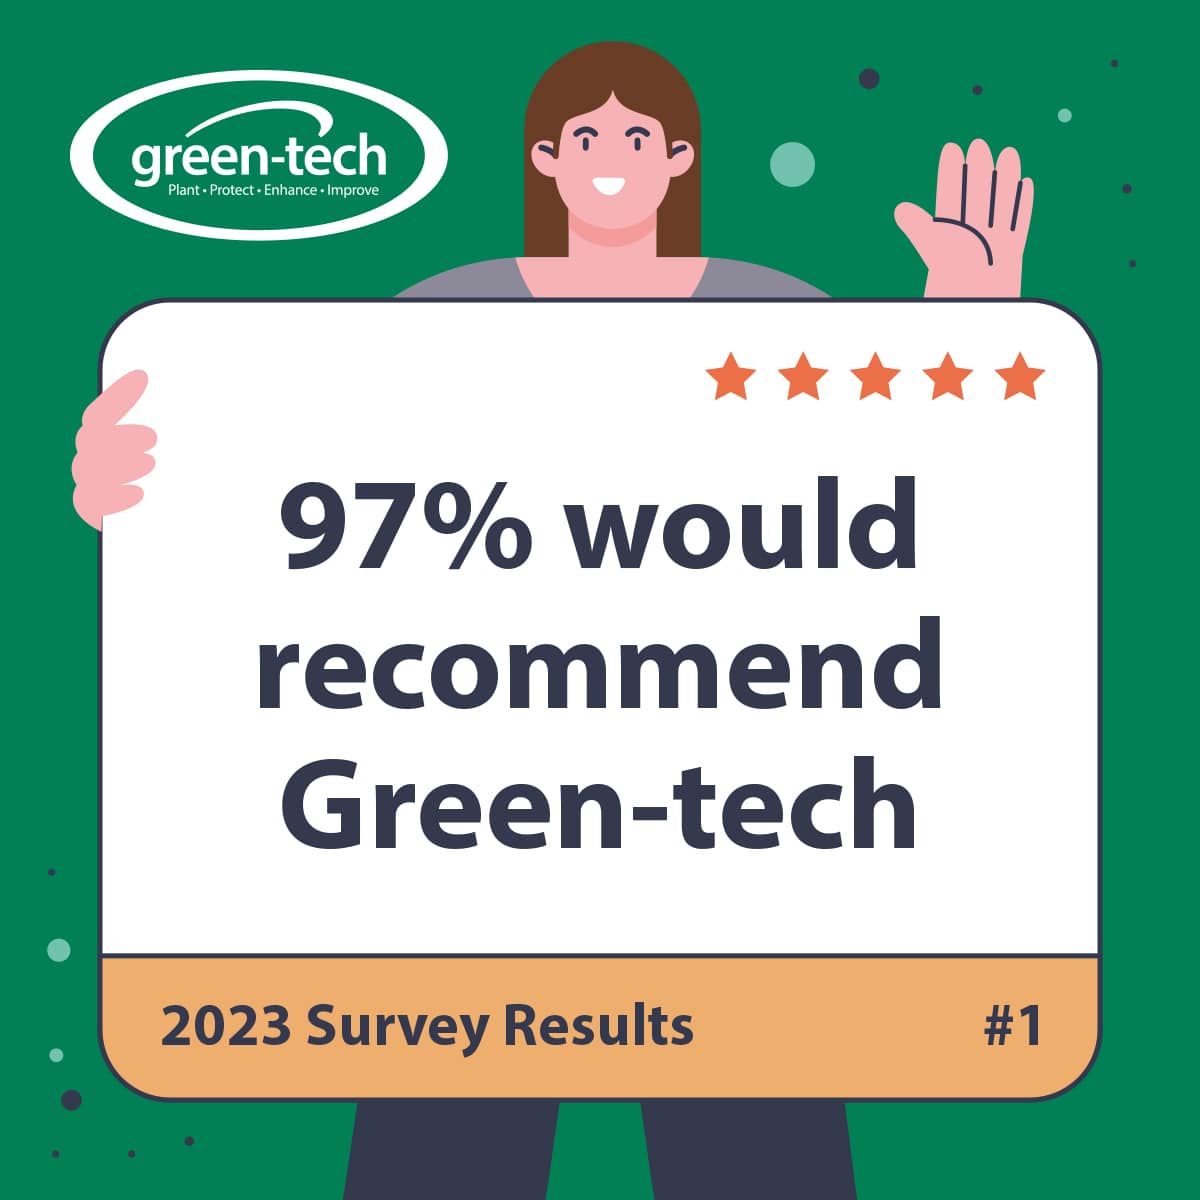 Impressive customer survey results for Green-tech 